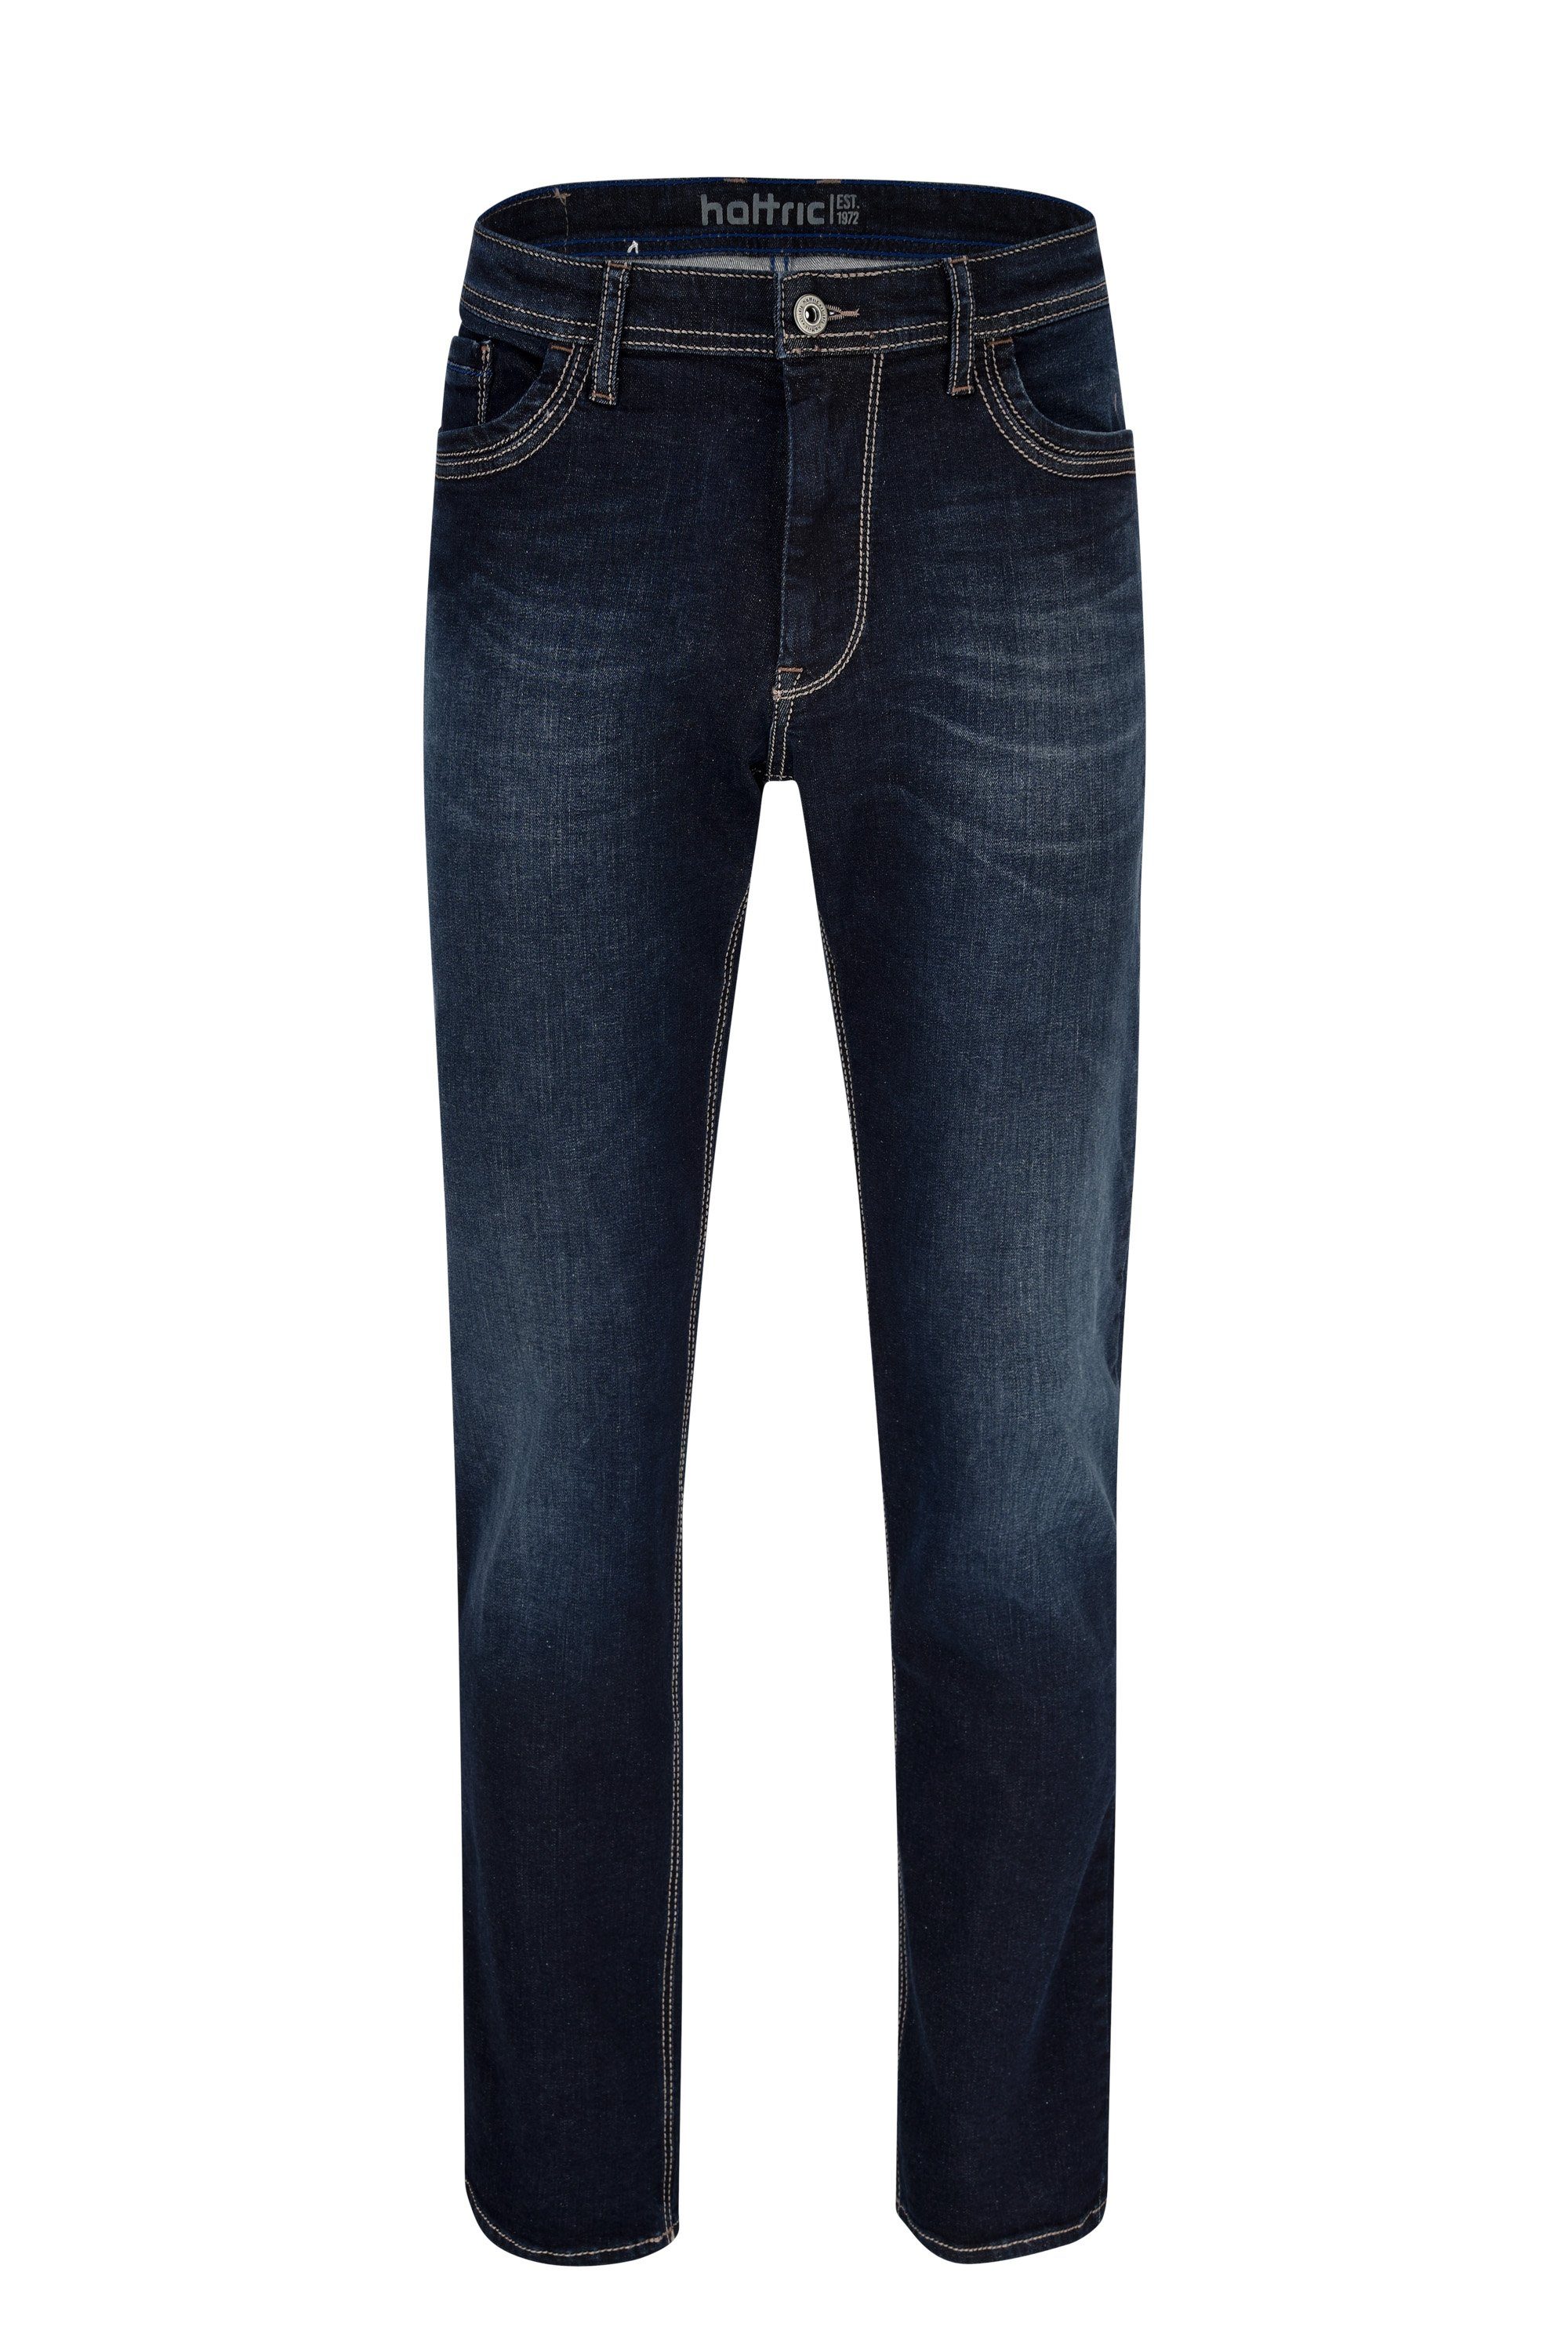 Hattric 5-Pocket-Jeans HATTRIC HUNTER dark blue 688385 9696.95 - HIGH-STRETCH | Straight-Fit Jeans